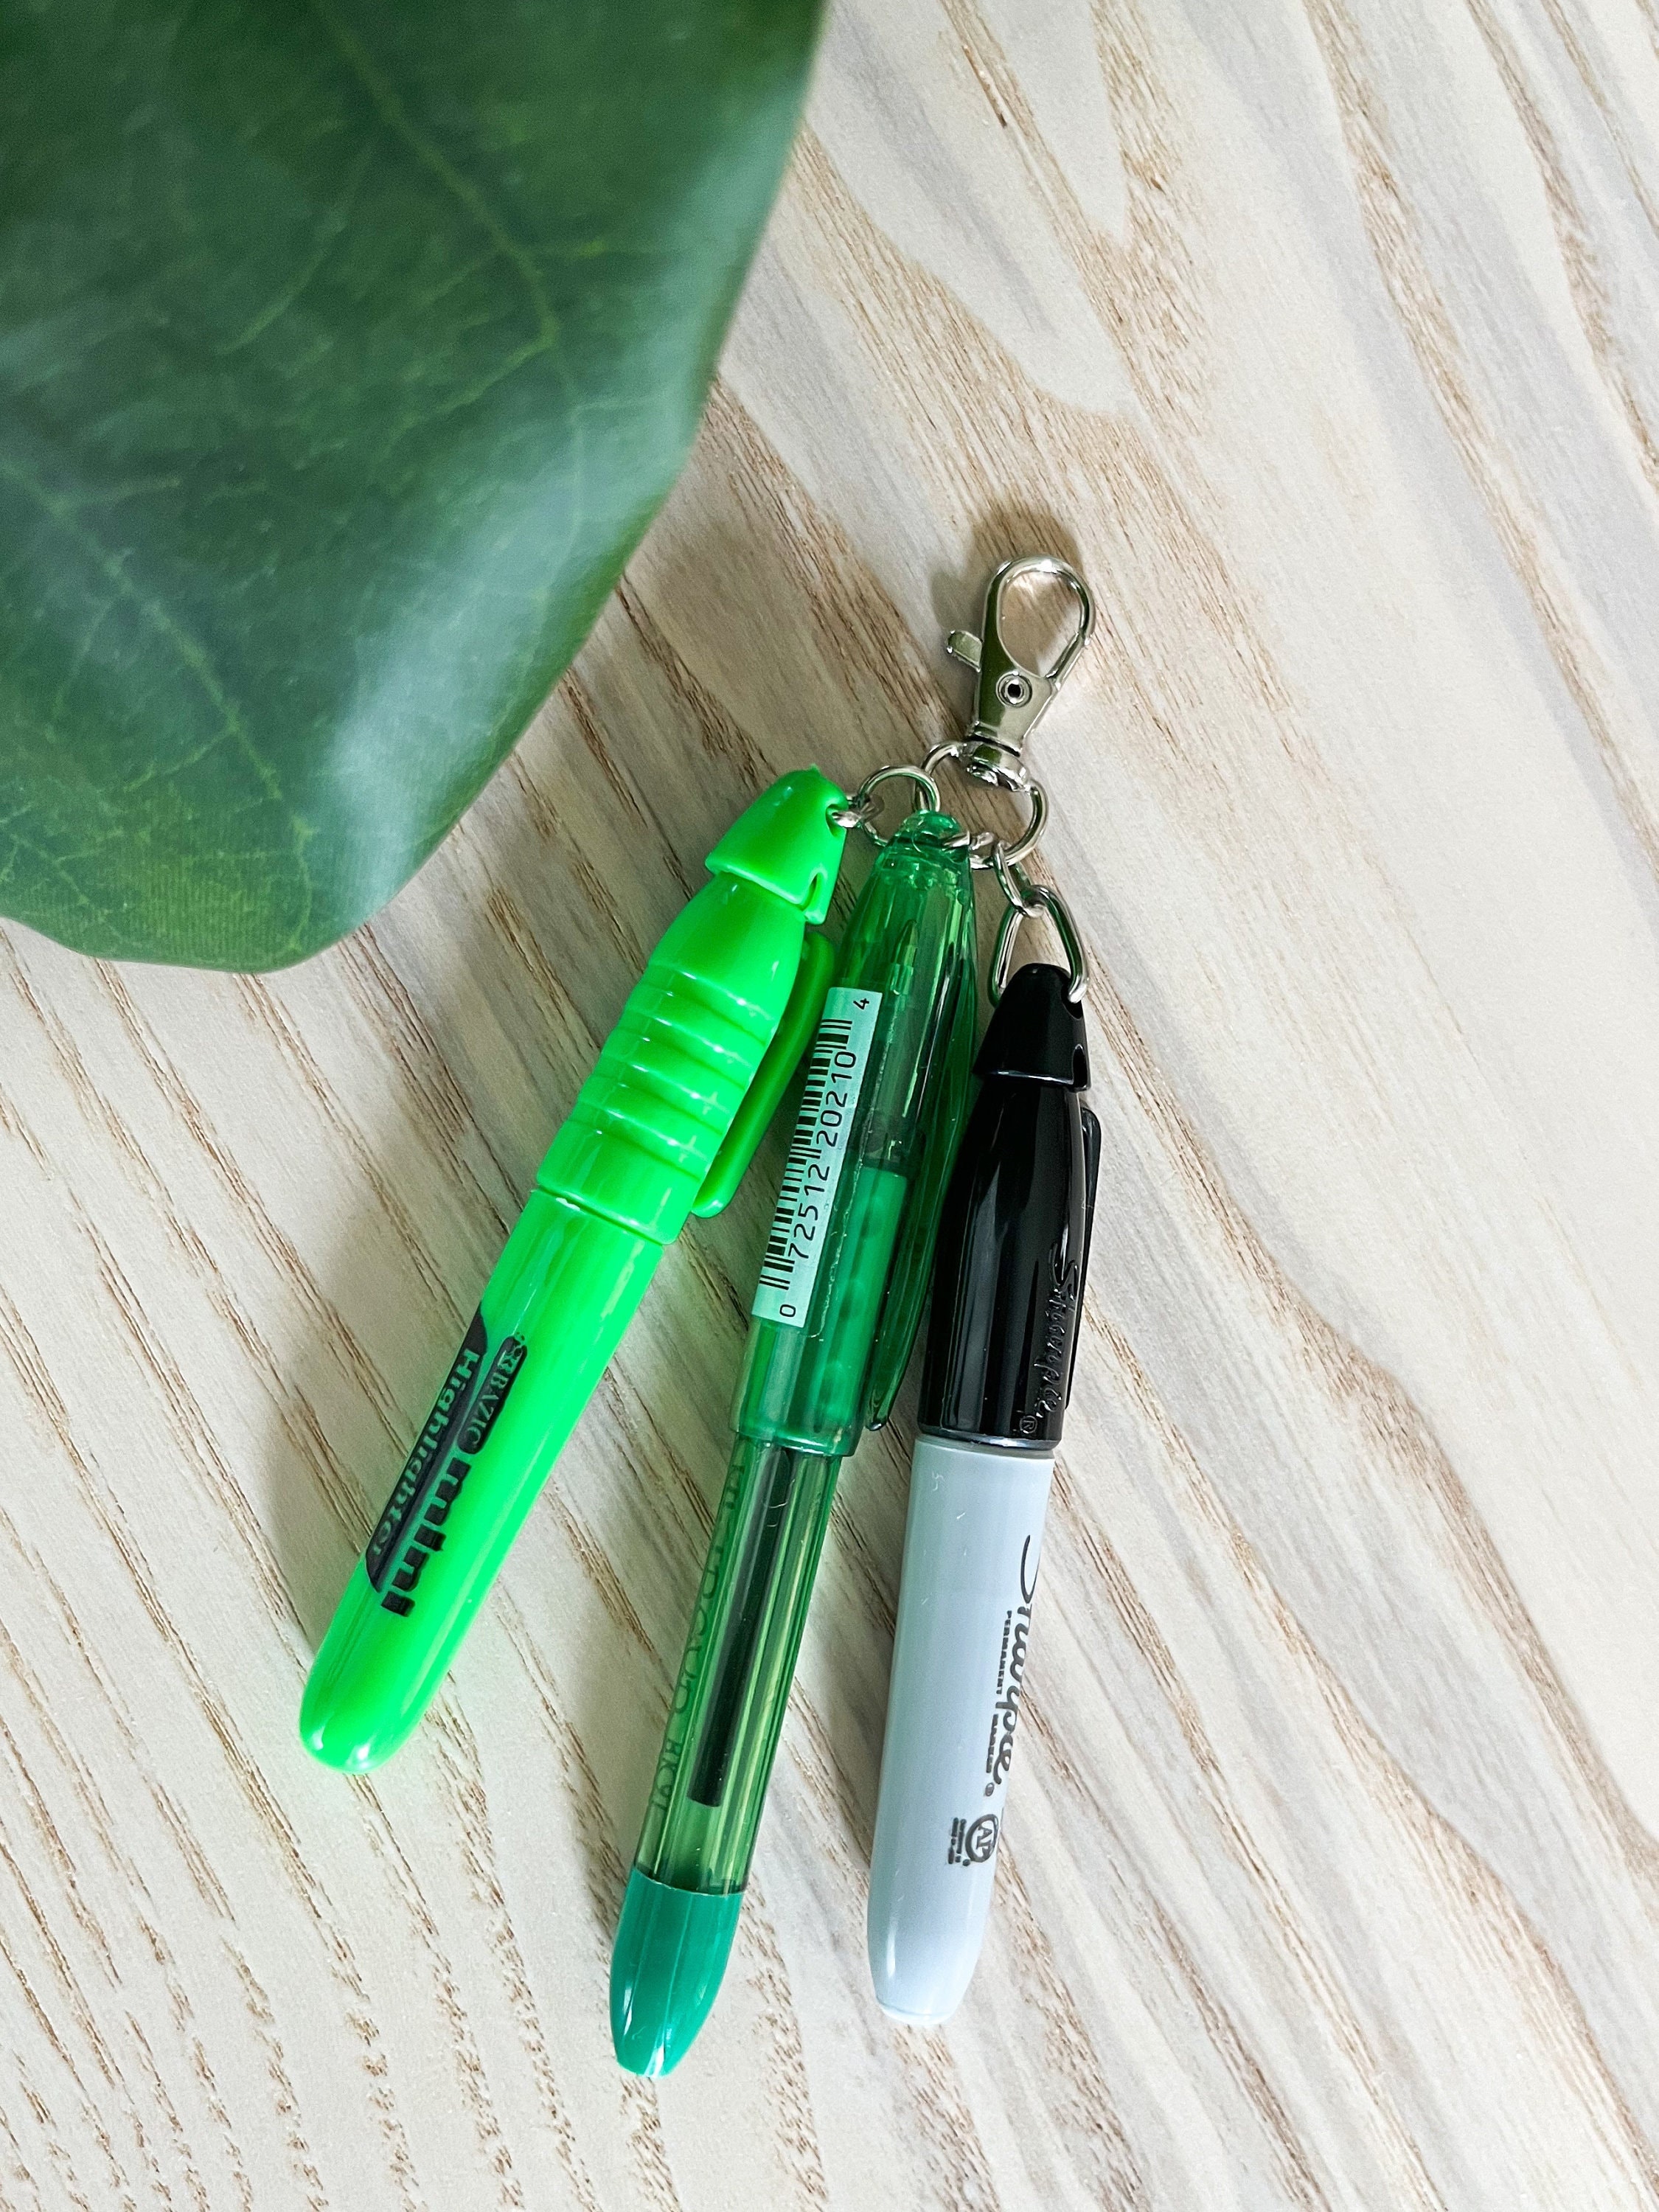 Build Your Own Badge Reel Accessory Bundle, Badge Holder Mini Pens